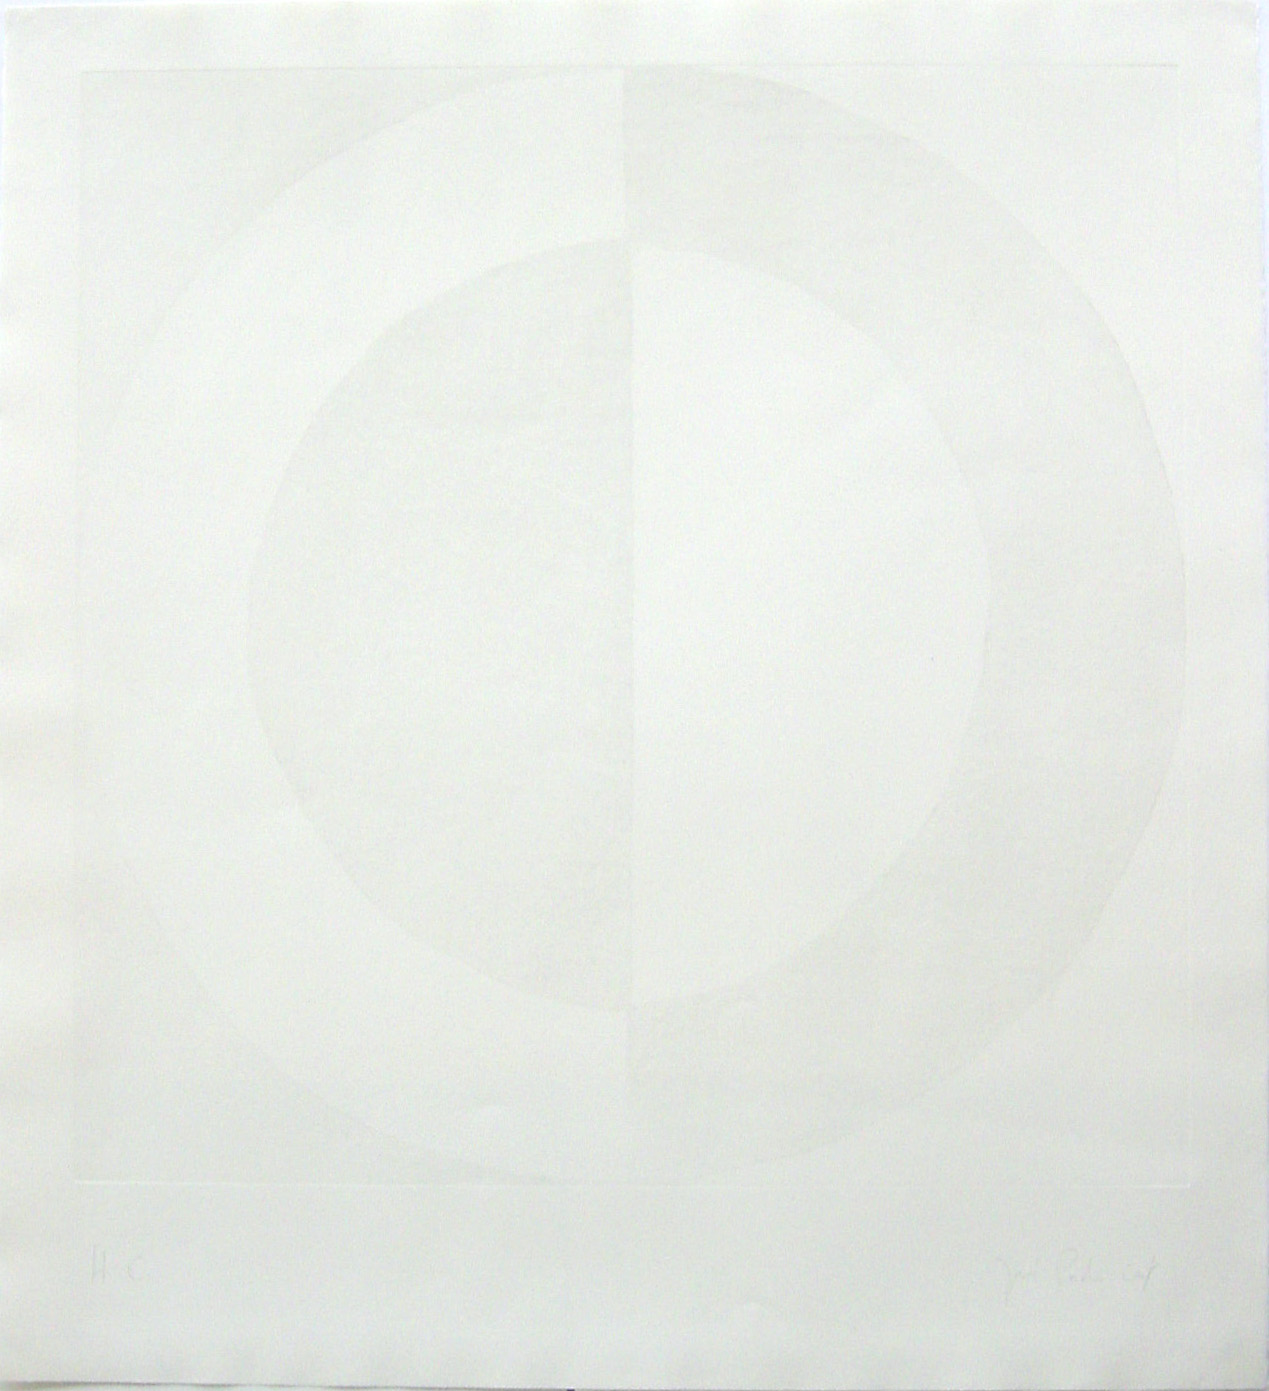 Untitled, (ed.12), 1997, etching, 124 x 112,5 cm.